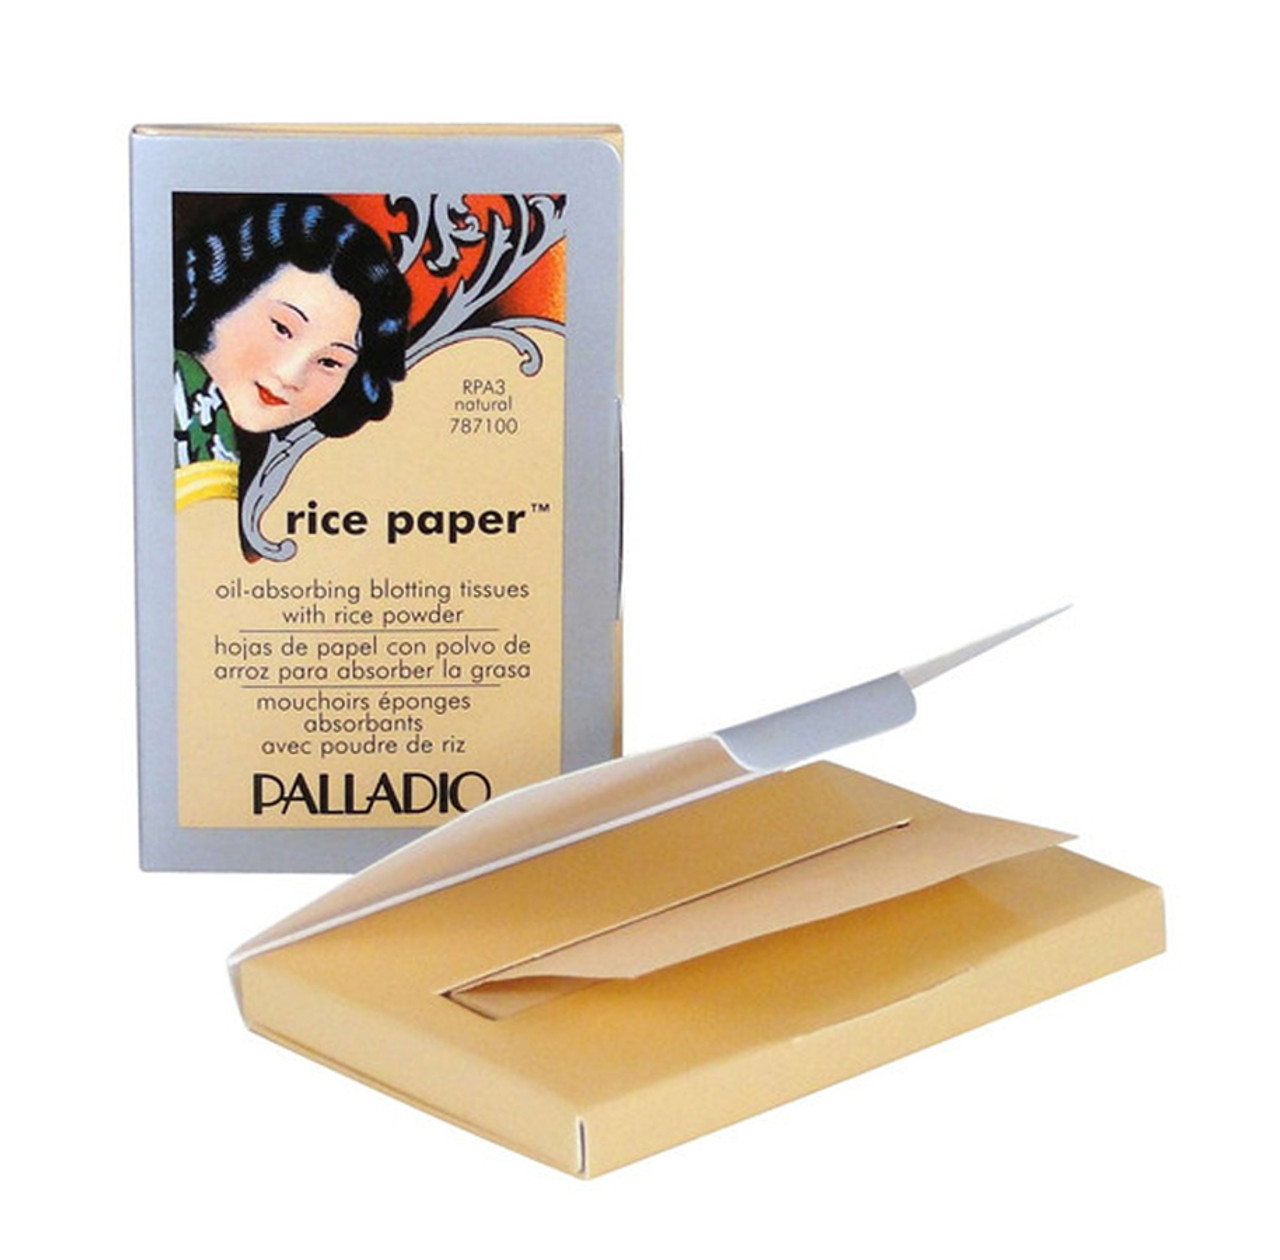 Palladio Rice Paper Tissue, Natural, Face Blotting Sheets with Natural Rice Powd